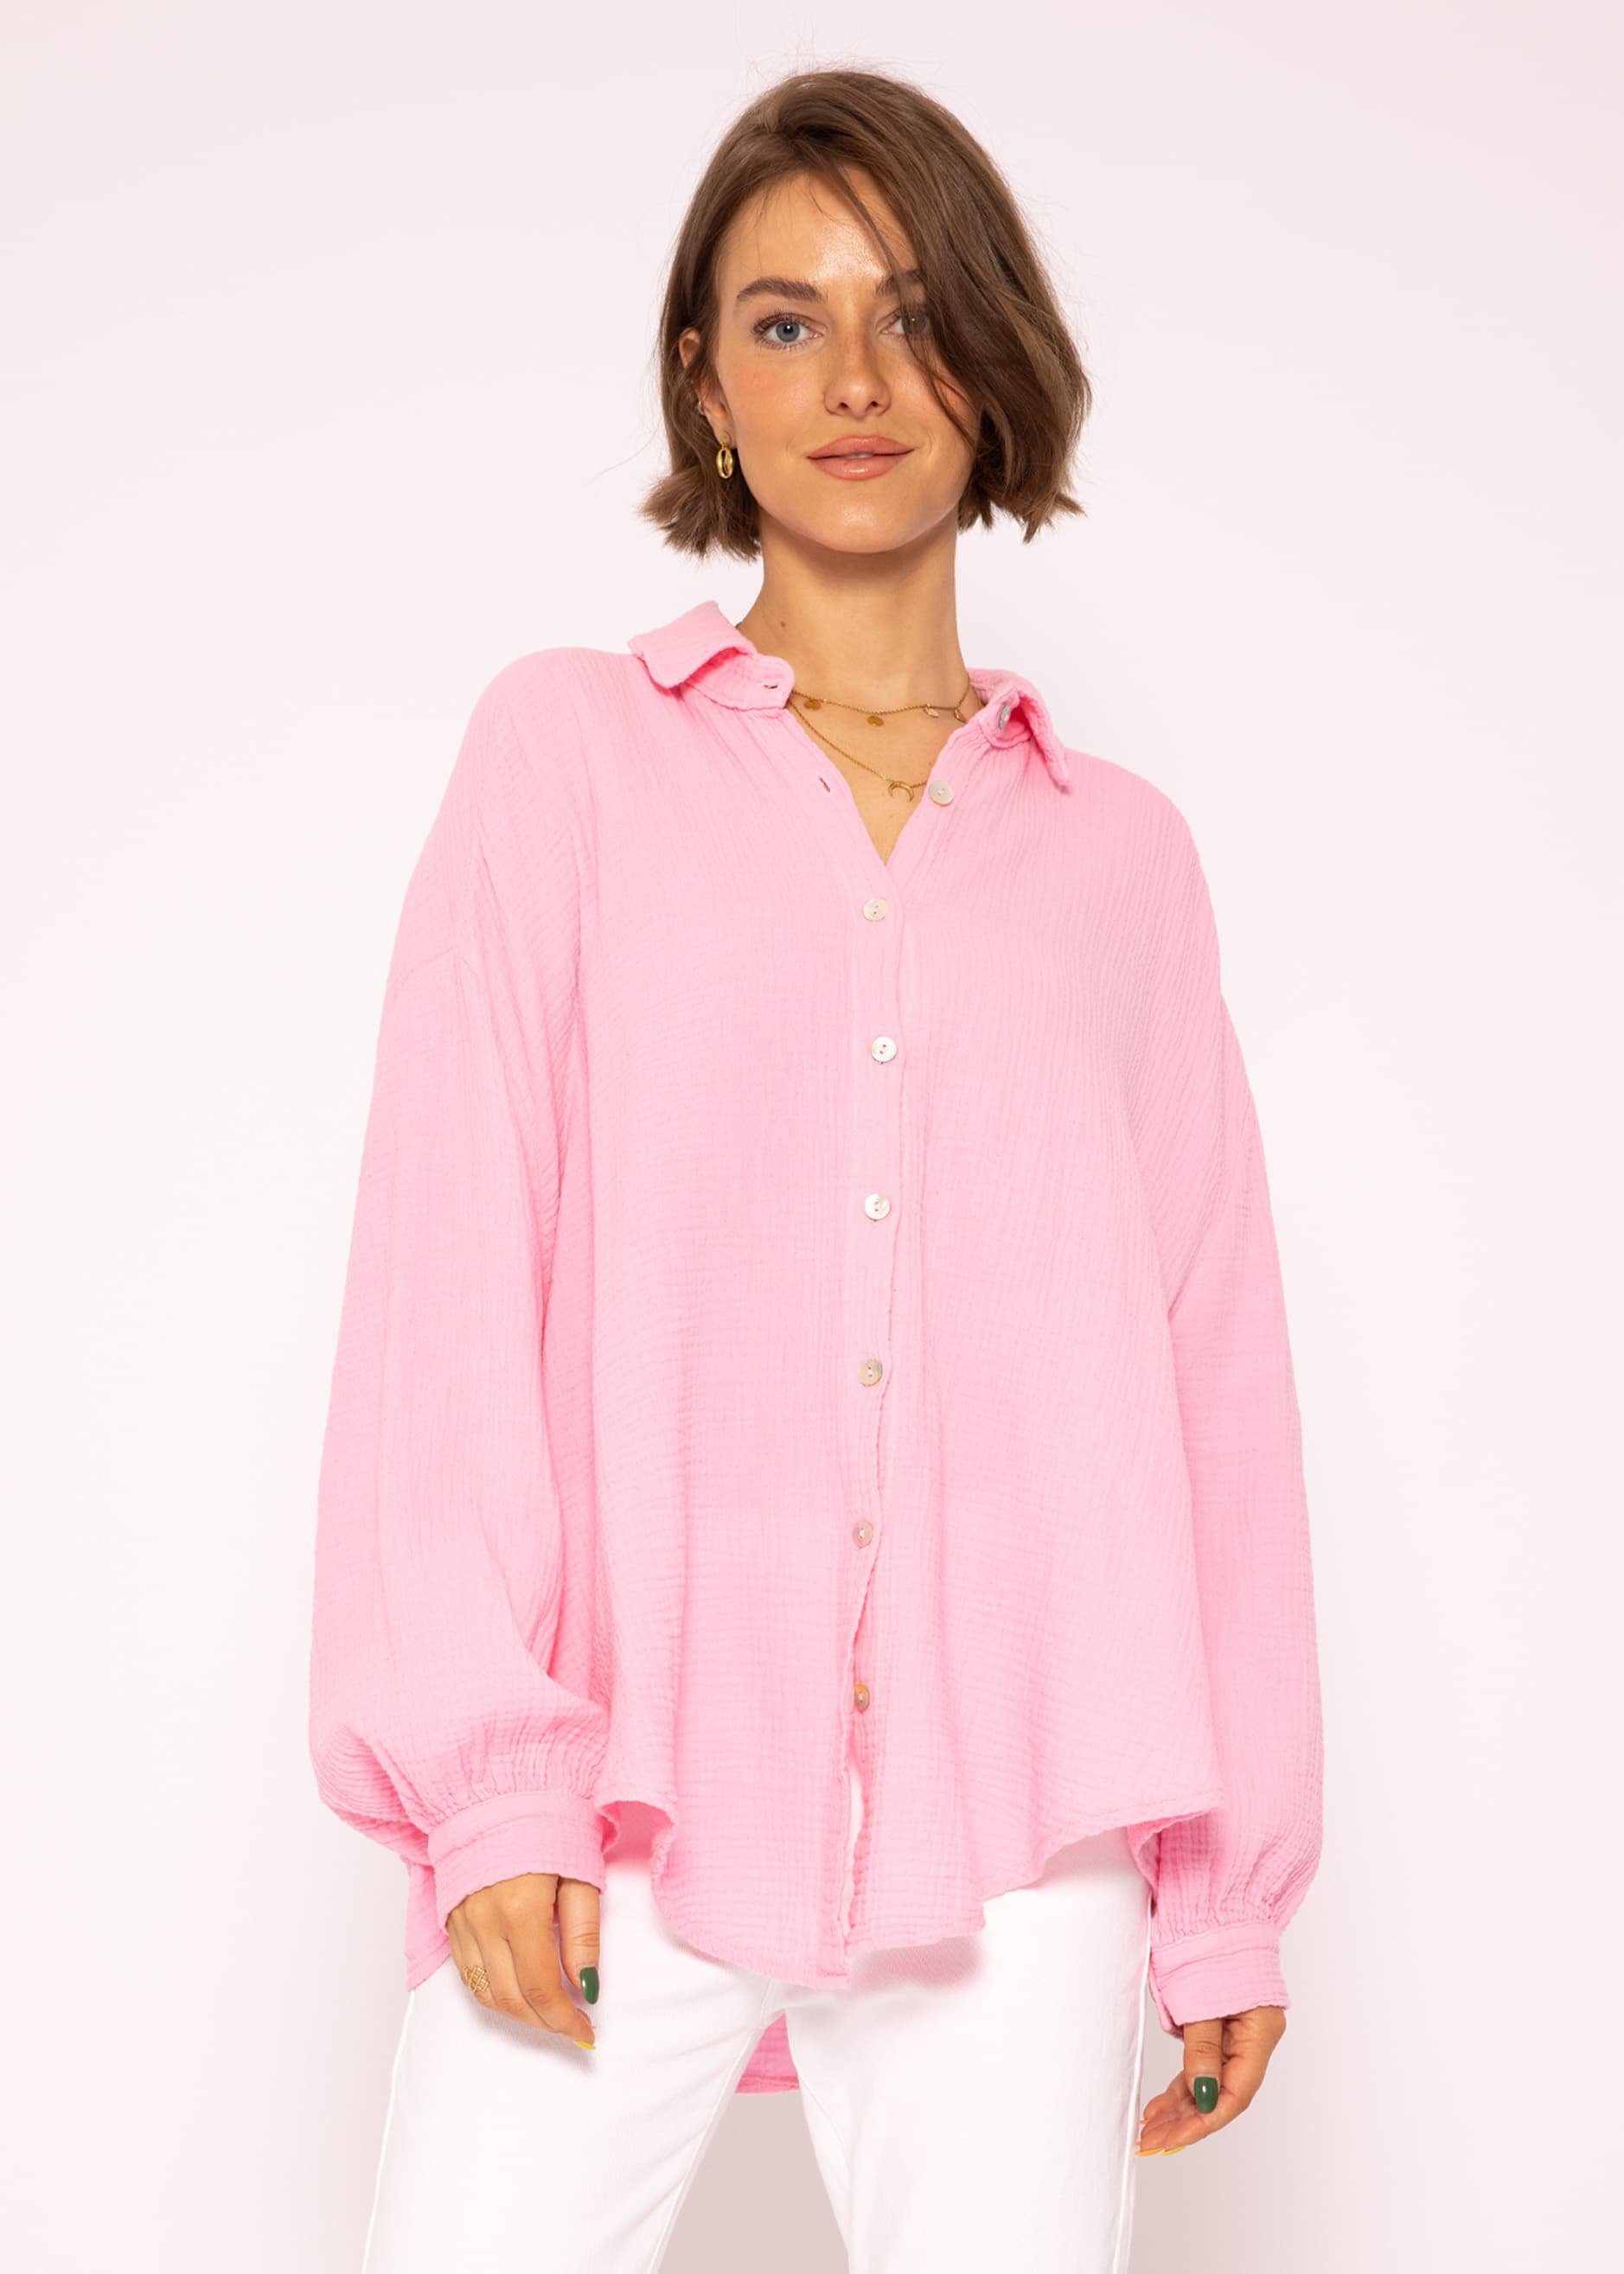 SASSYCLASSY Longbluse Oversize Musselin Bluse Damen Langarm Hemdbluse lang aus Baumwolle mit V-Ausschnitt, One Size (Gr. 36-48) Babyrosa